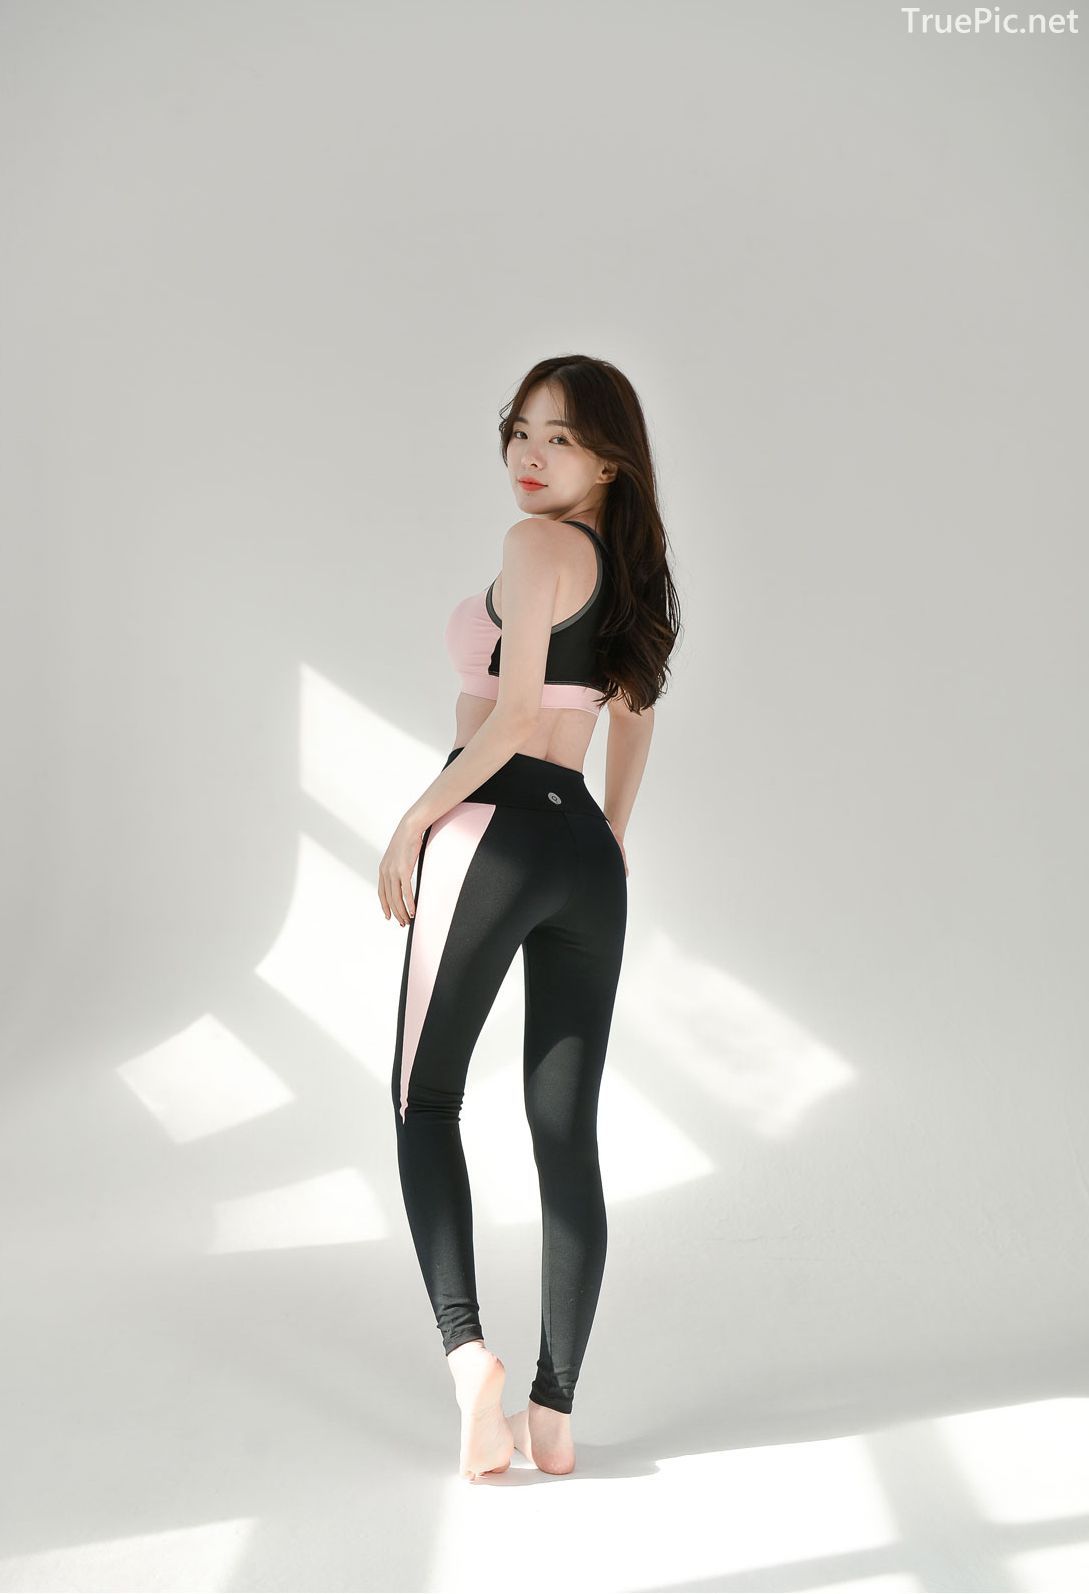 Korean Lingerie Queen - Haneul - Fitness Set Collection - TruePic.net - Picture 47